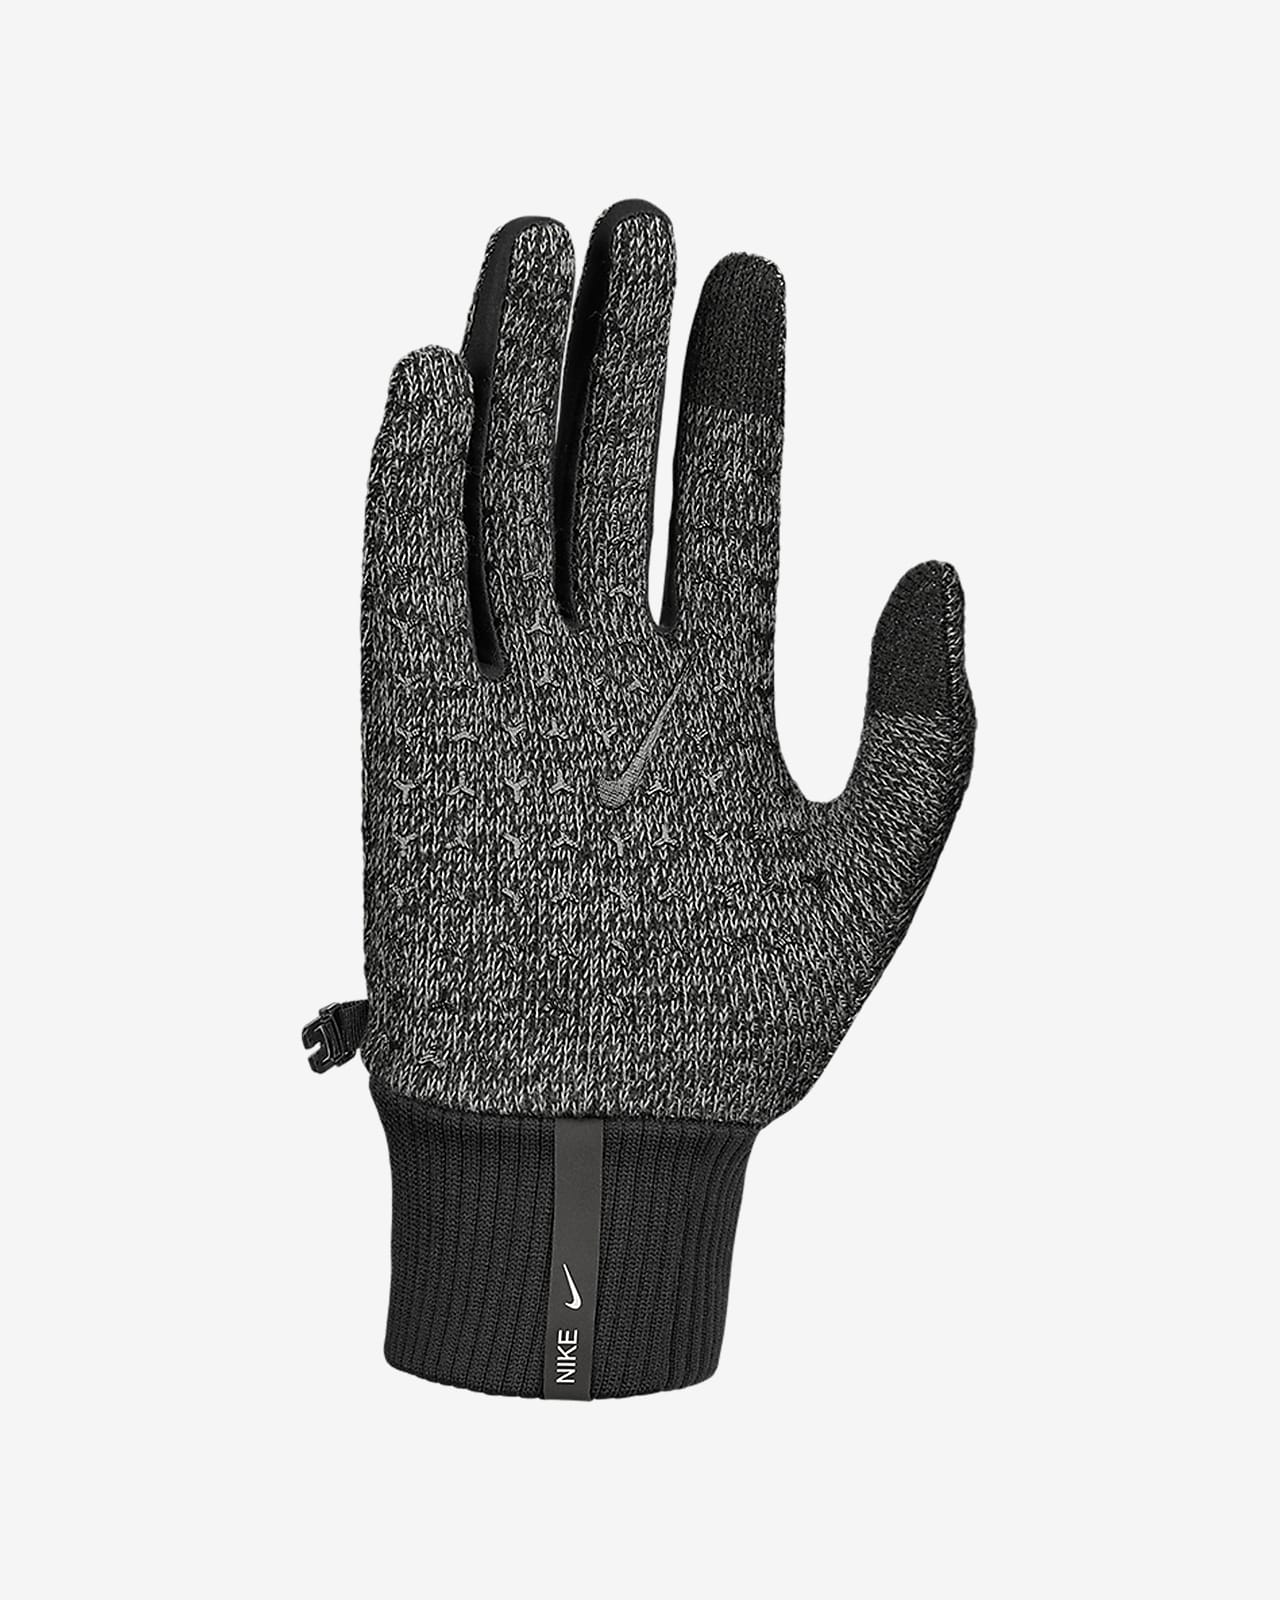 Mens Knit Gloves : Mens Architect Fleece Combo Knit Gloves Boscov S ...